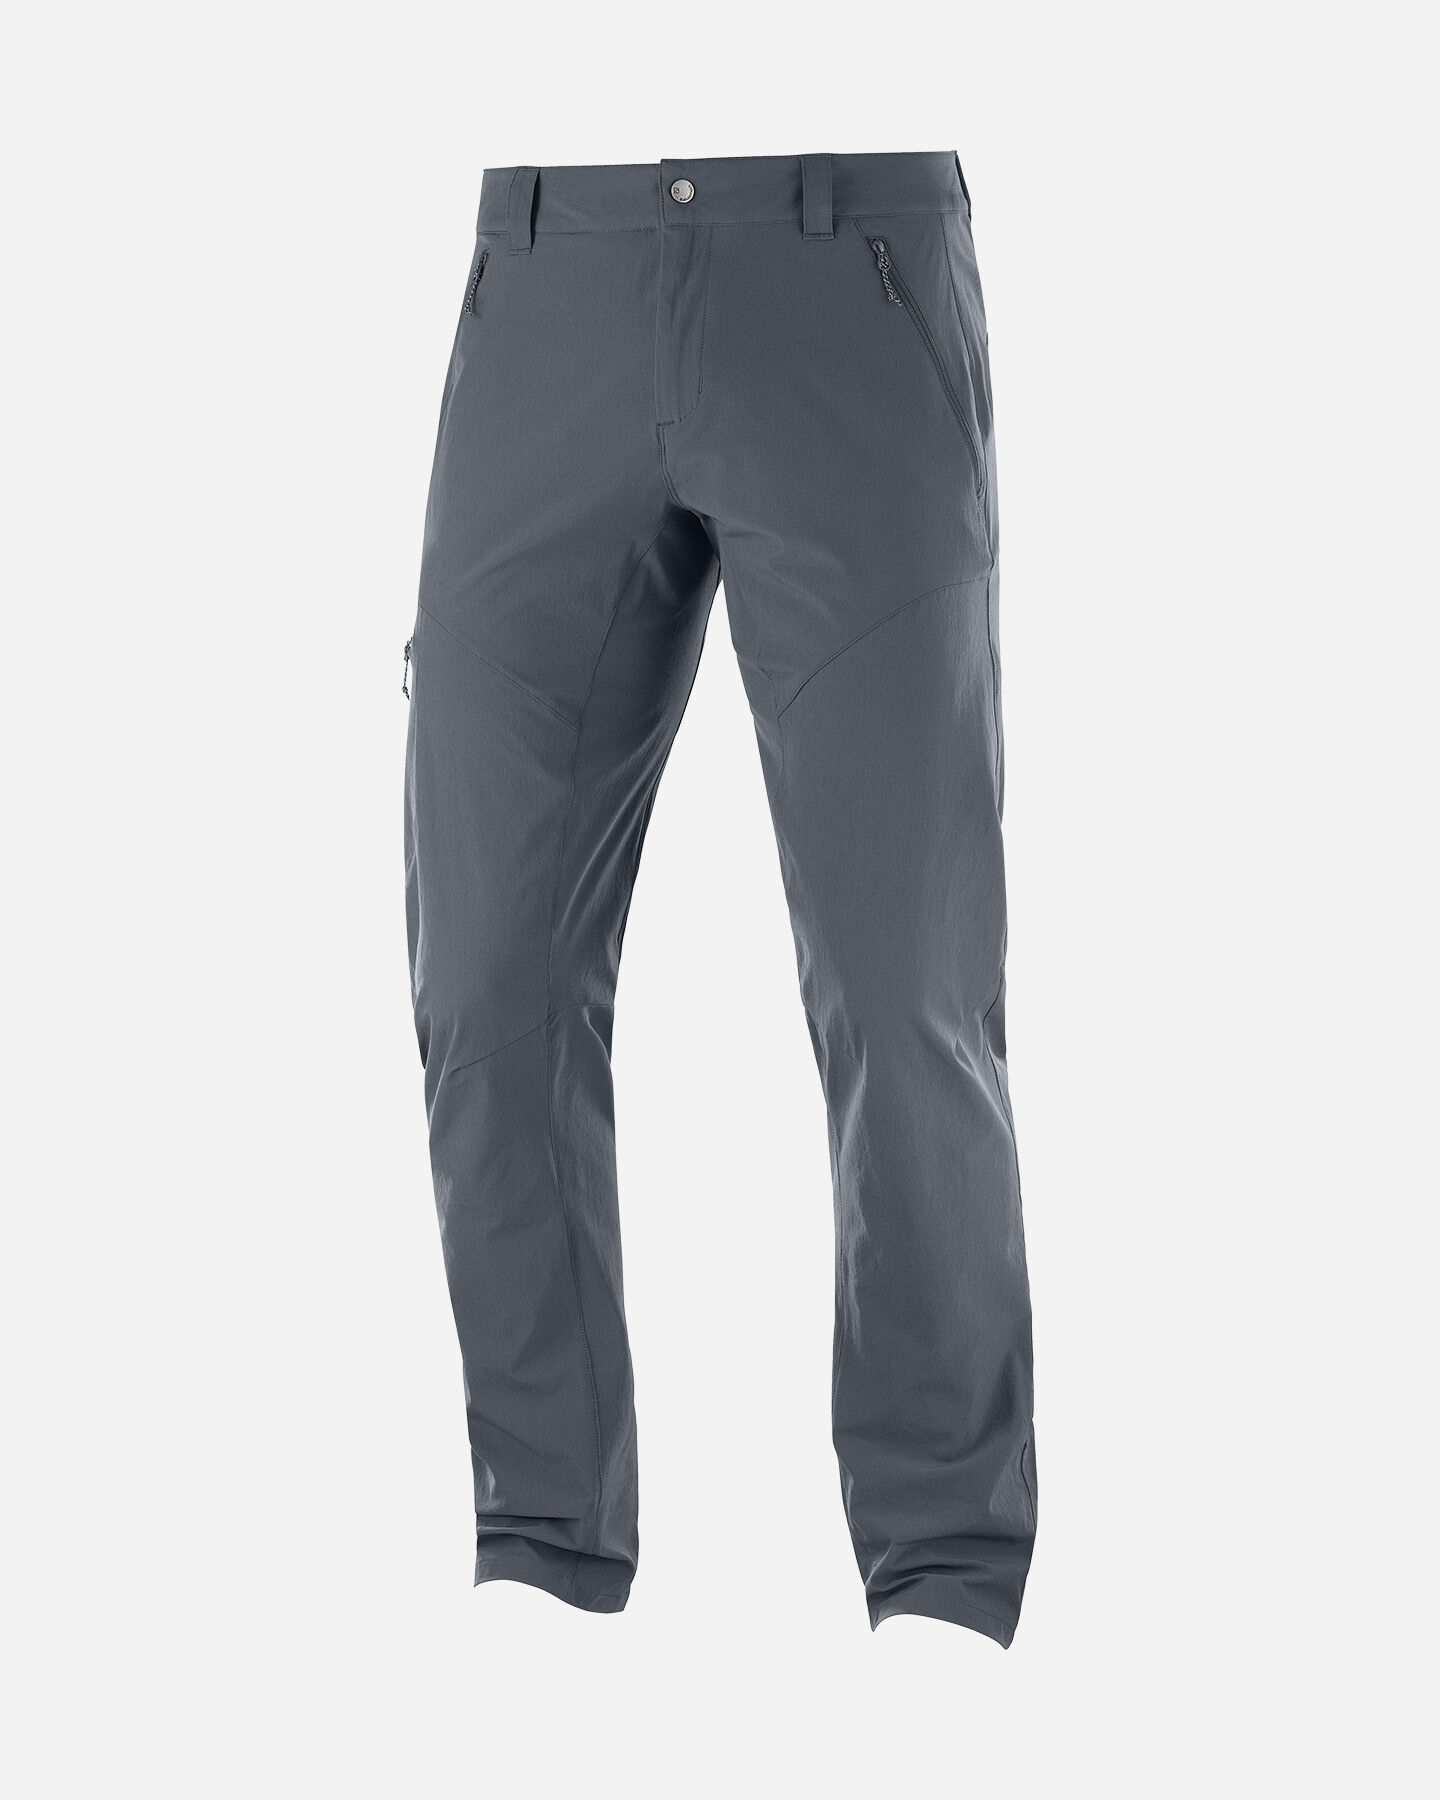  Pantalone outdoor SALOMON WAYFARER M S5173871|UNI|46/R scatto 0